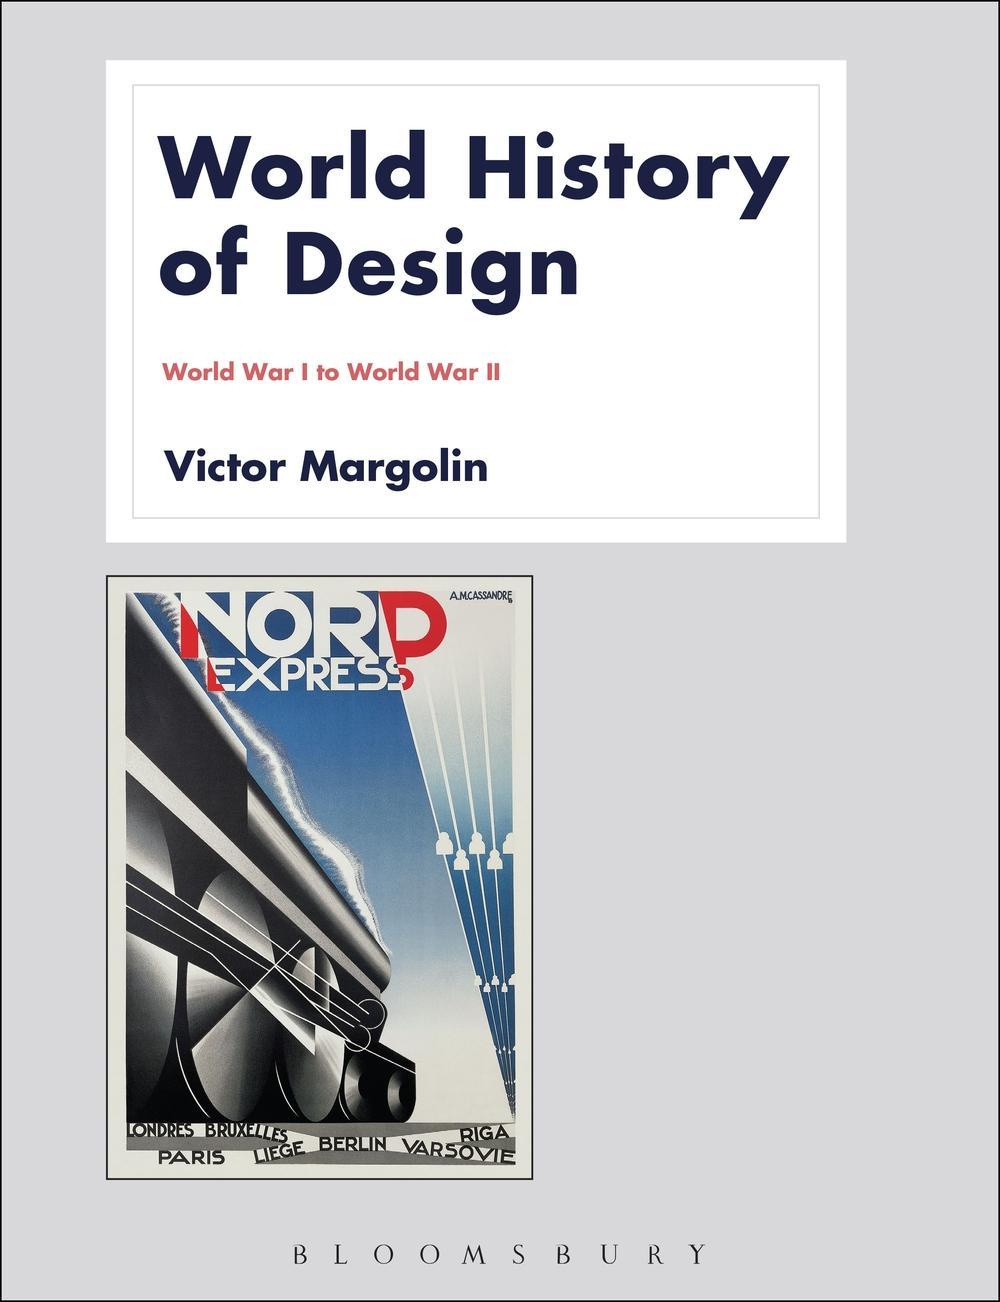 World History of Design Volume 2 - Victor Margolin